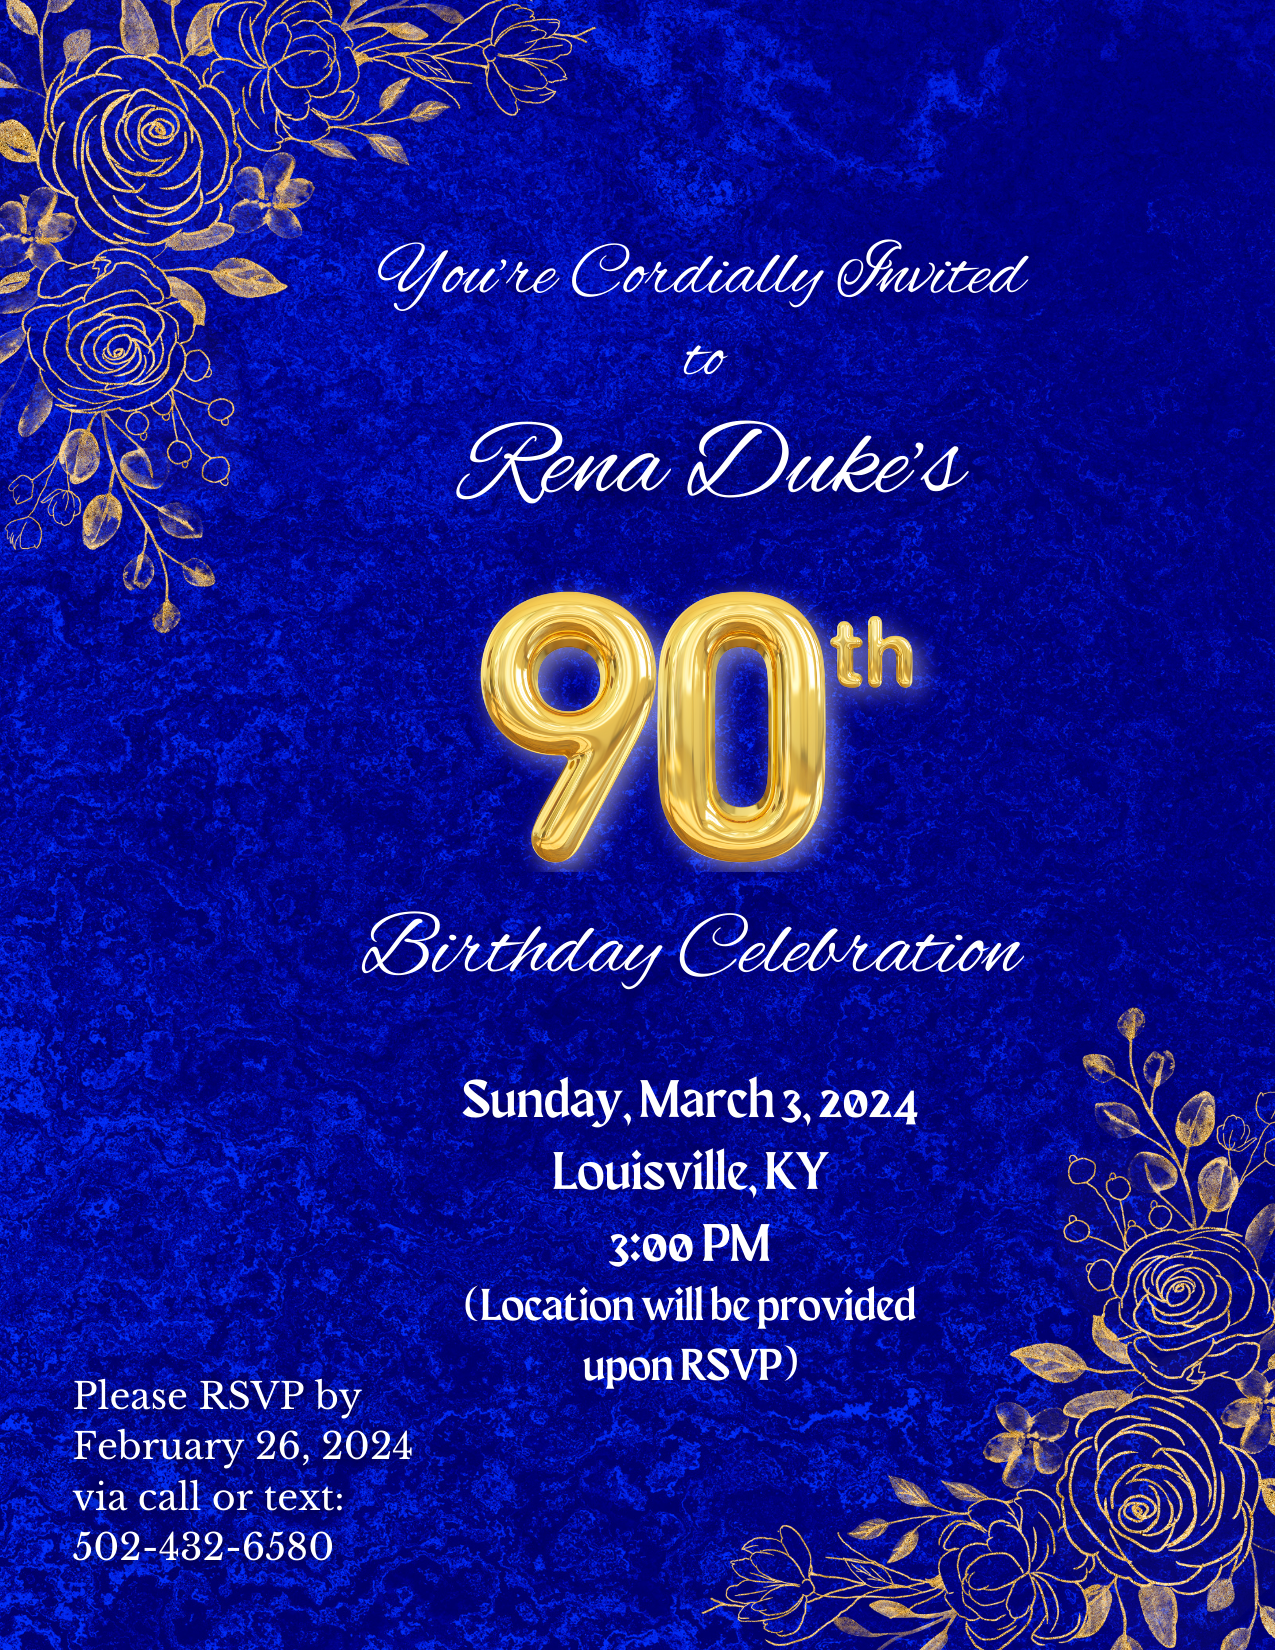 Custom Birthday Party Invitation